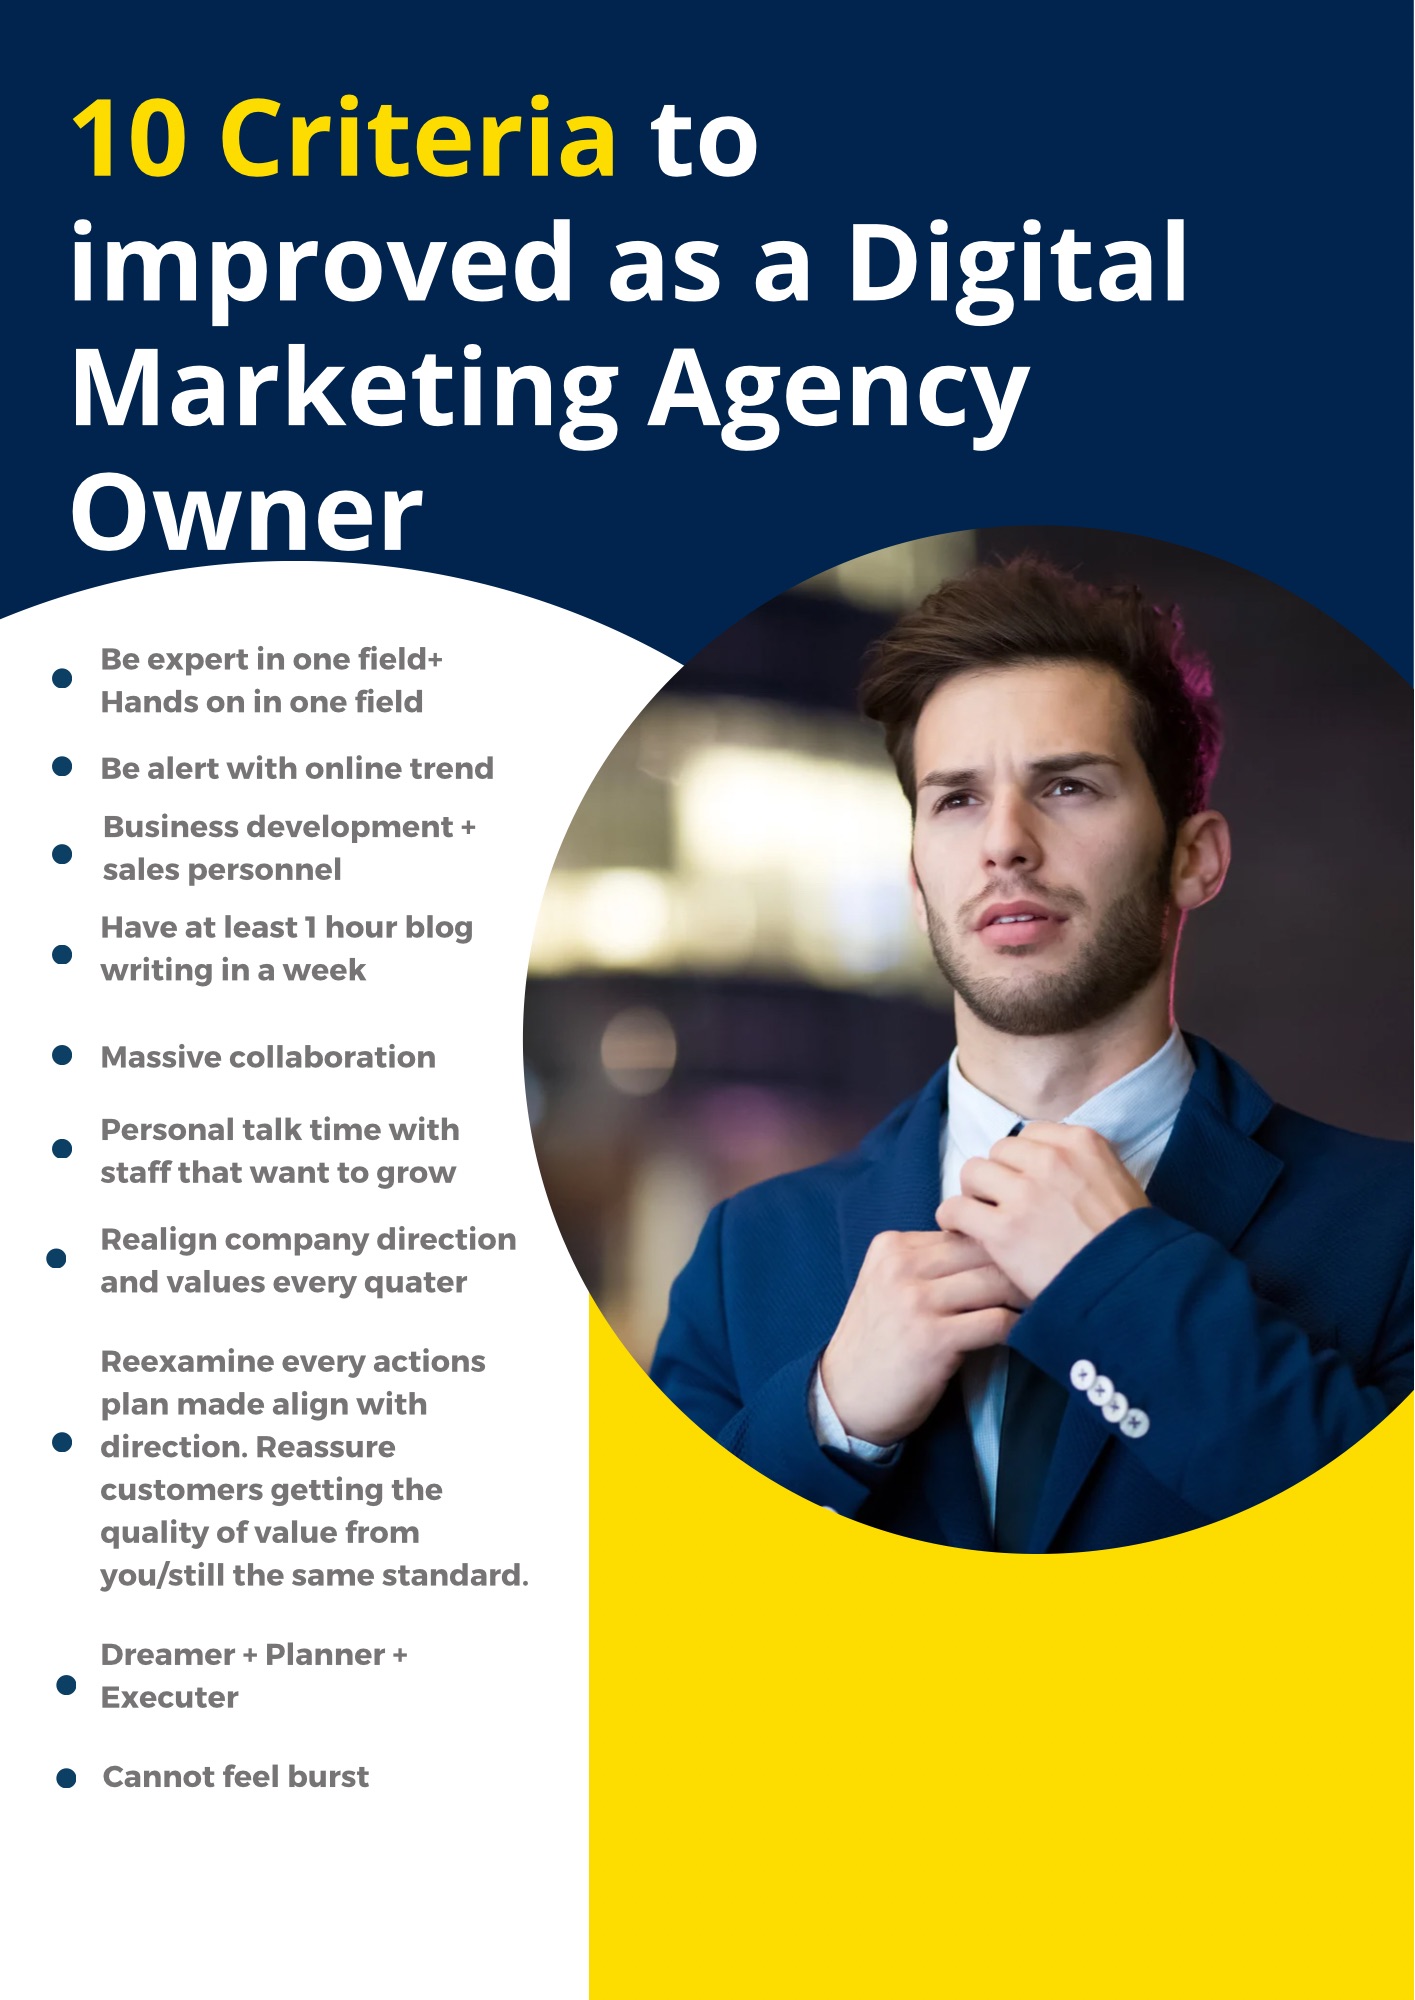 Digital Marketing Agency Owner